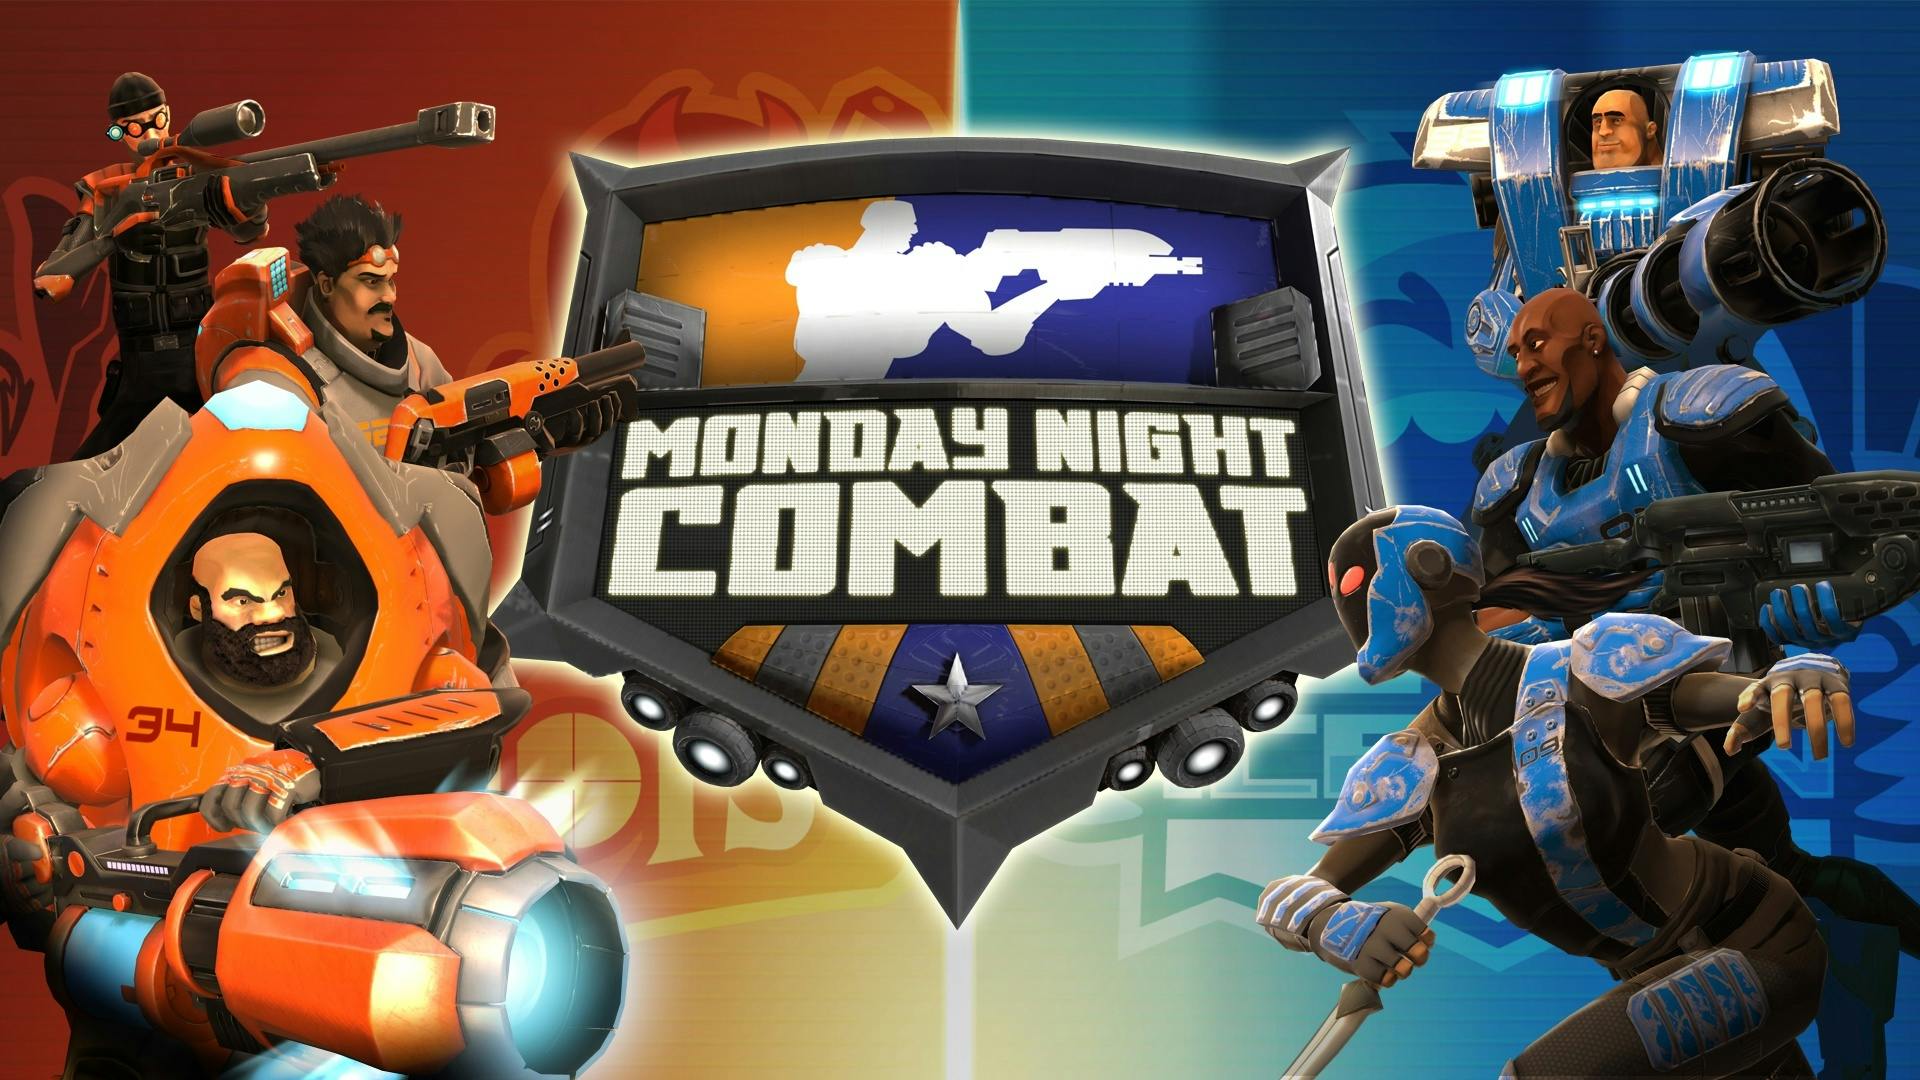 Monday night combat. Monday Night Combat PC Cover. Super Monday Night Combat characters. The Ice man [ super Monday Night Combat ].